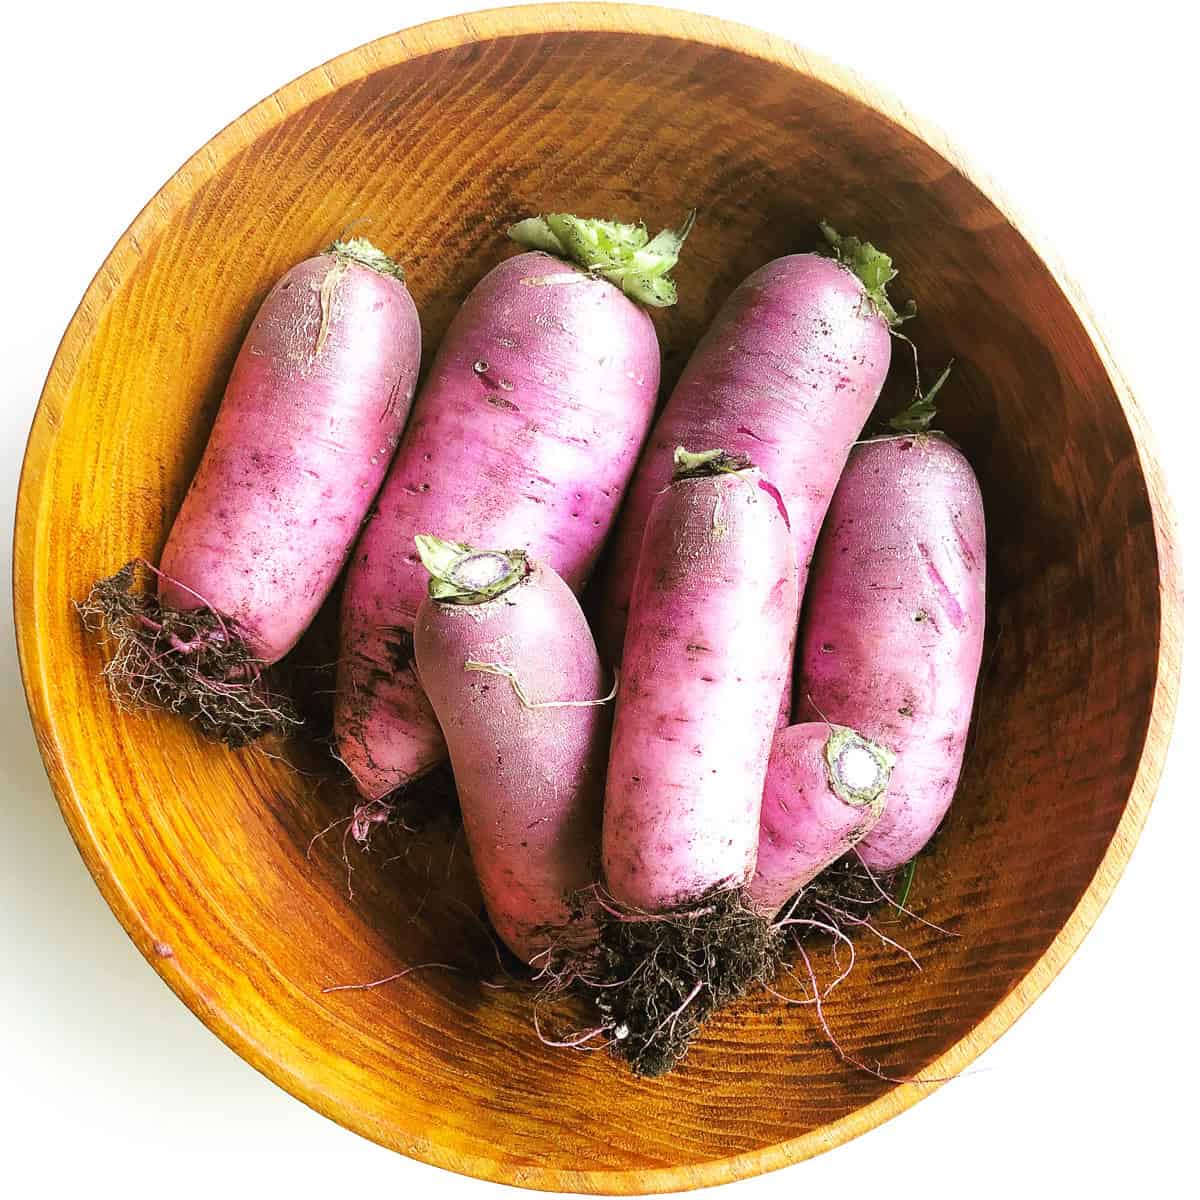 A wooden bowl containing mini purple daikon radishes.